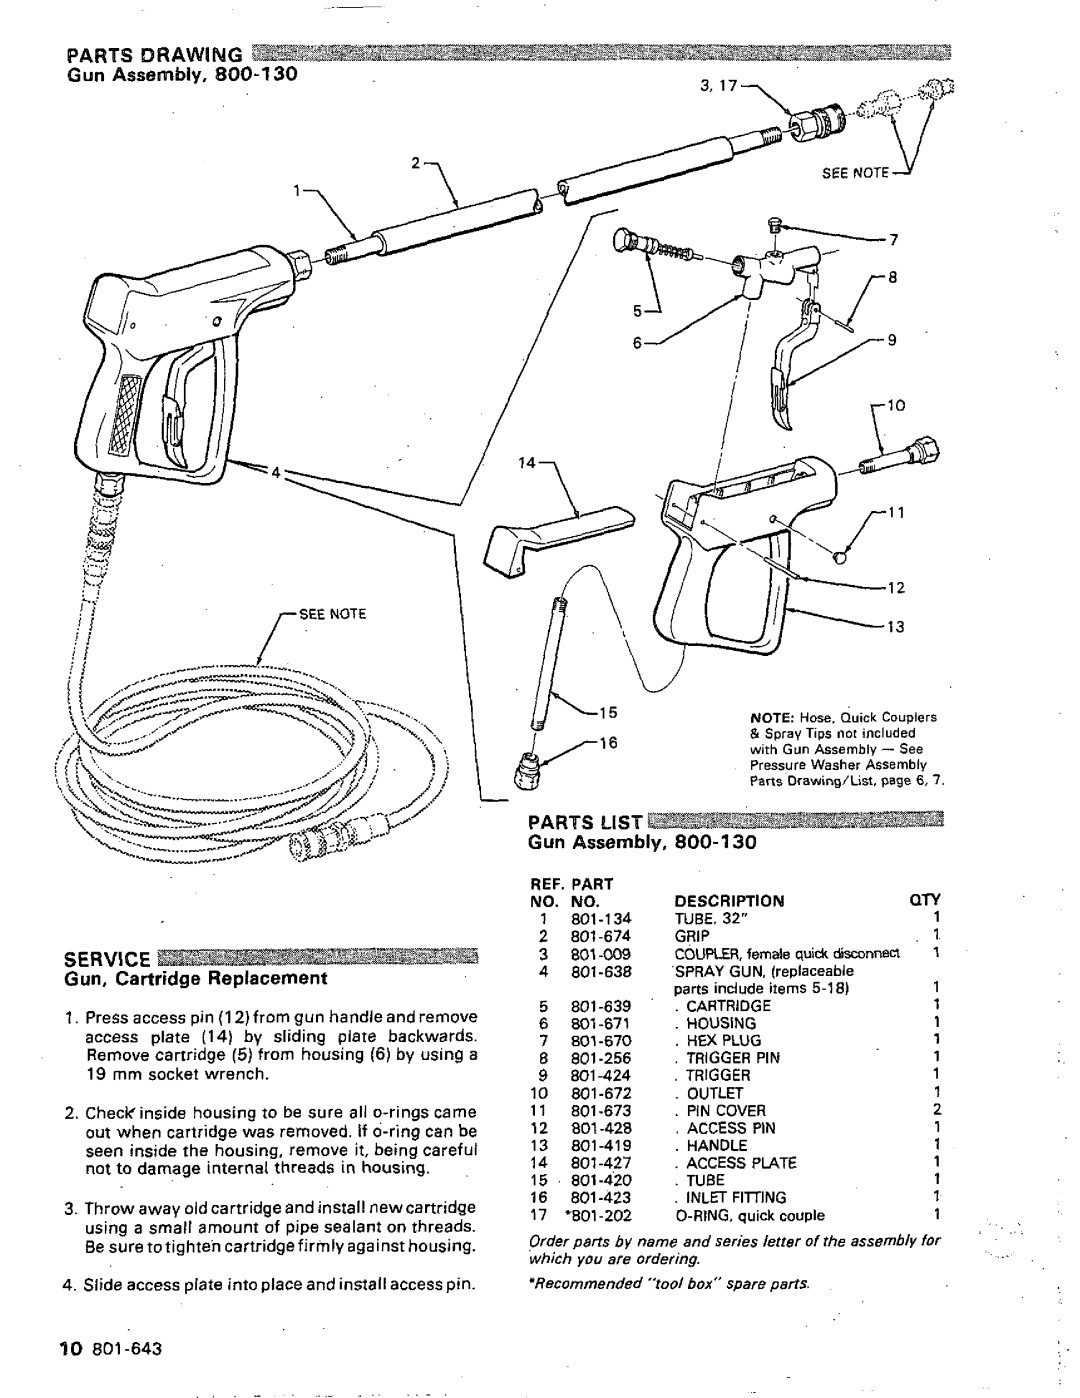 Graco Inc 801-643 manual Service, Gun Assembly, Gun,CartridgeReplacement, Hex Plug 